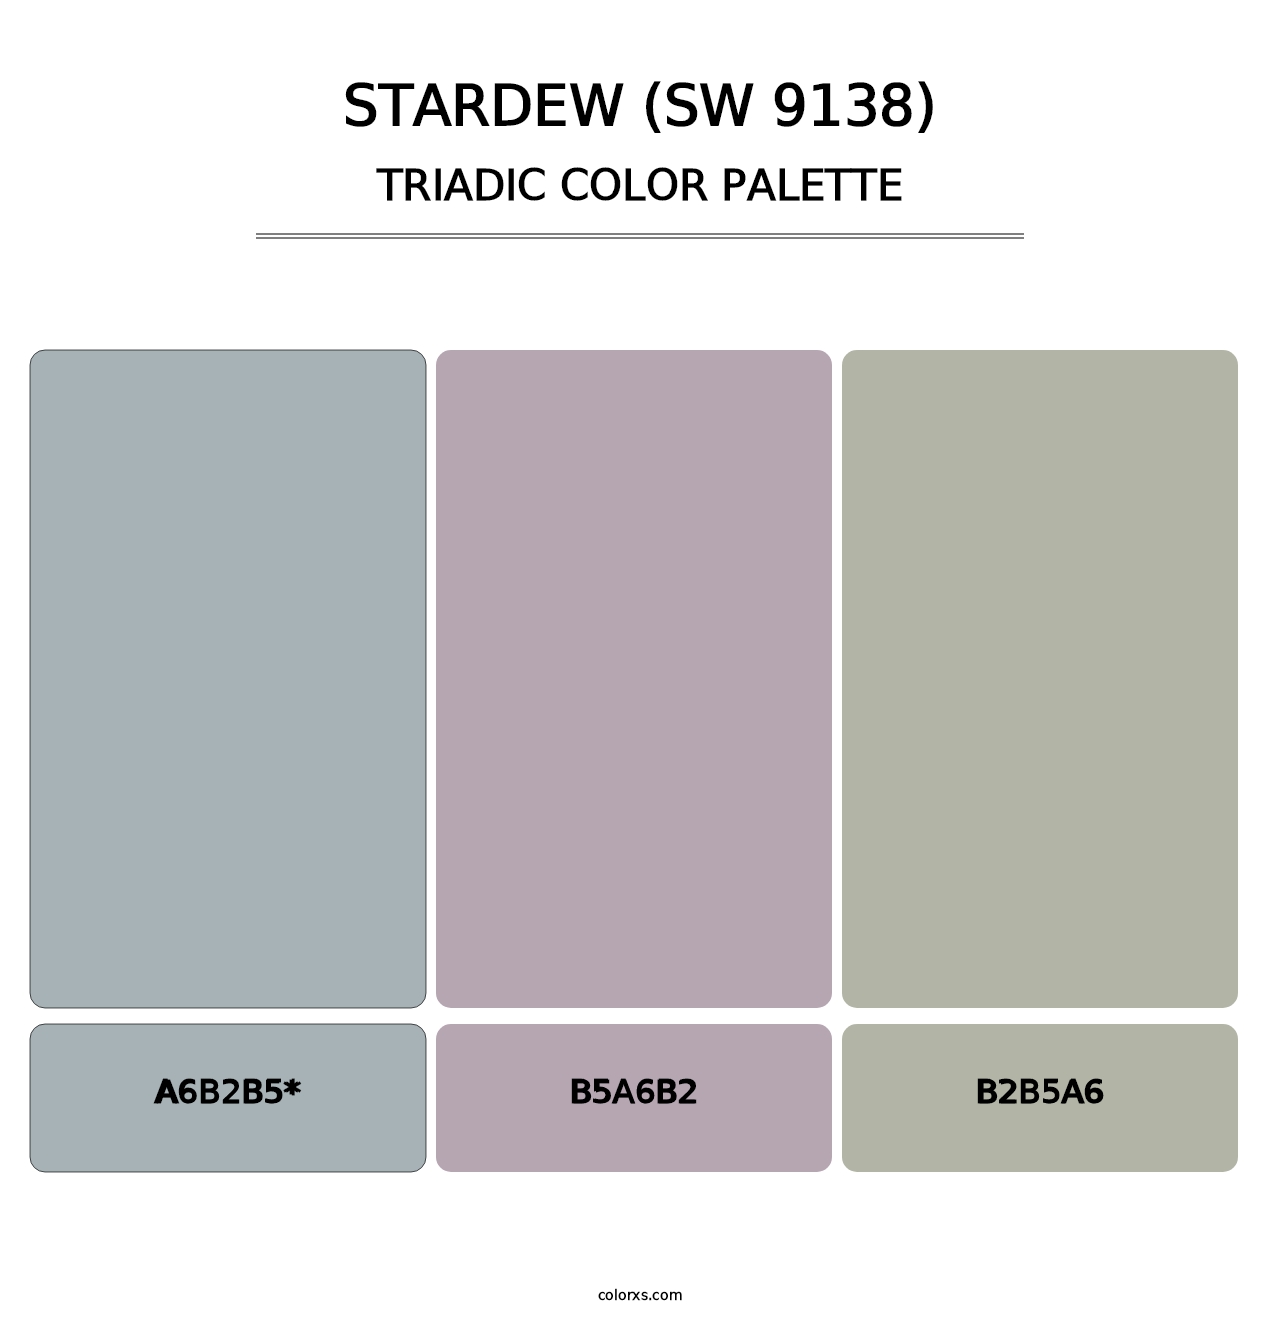 Stardew (SW 9138) - Triadic Color Palette